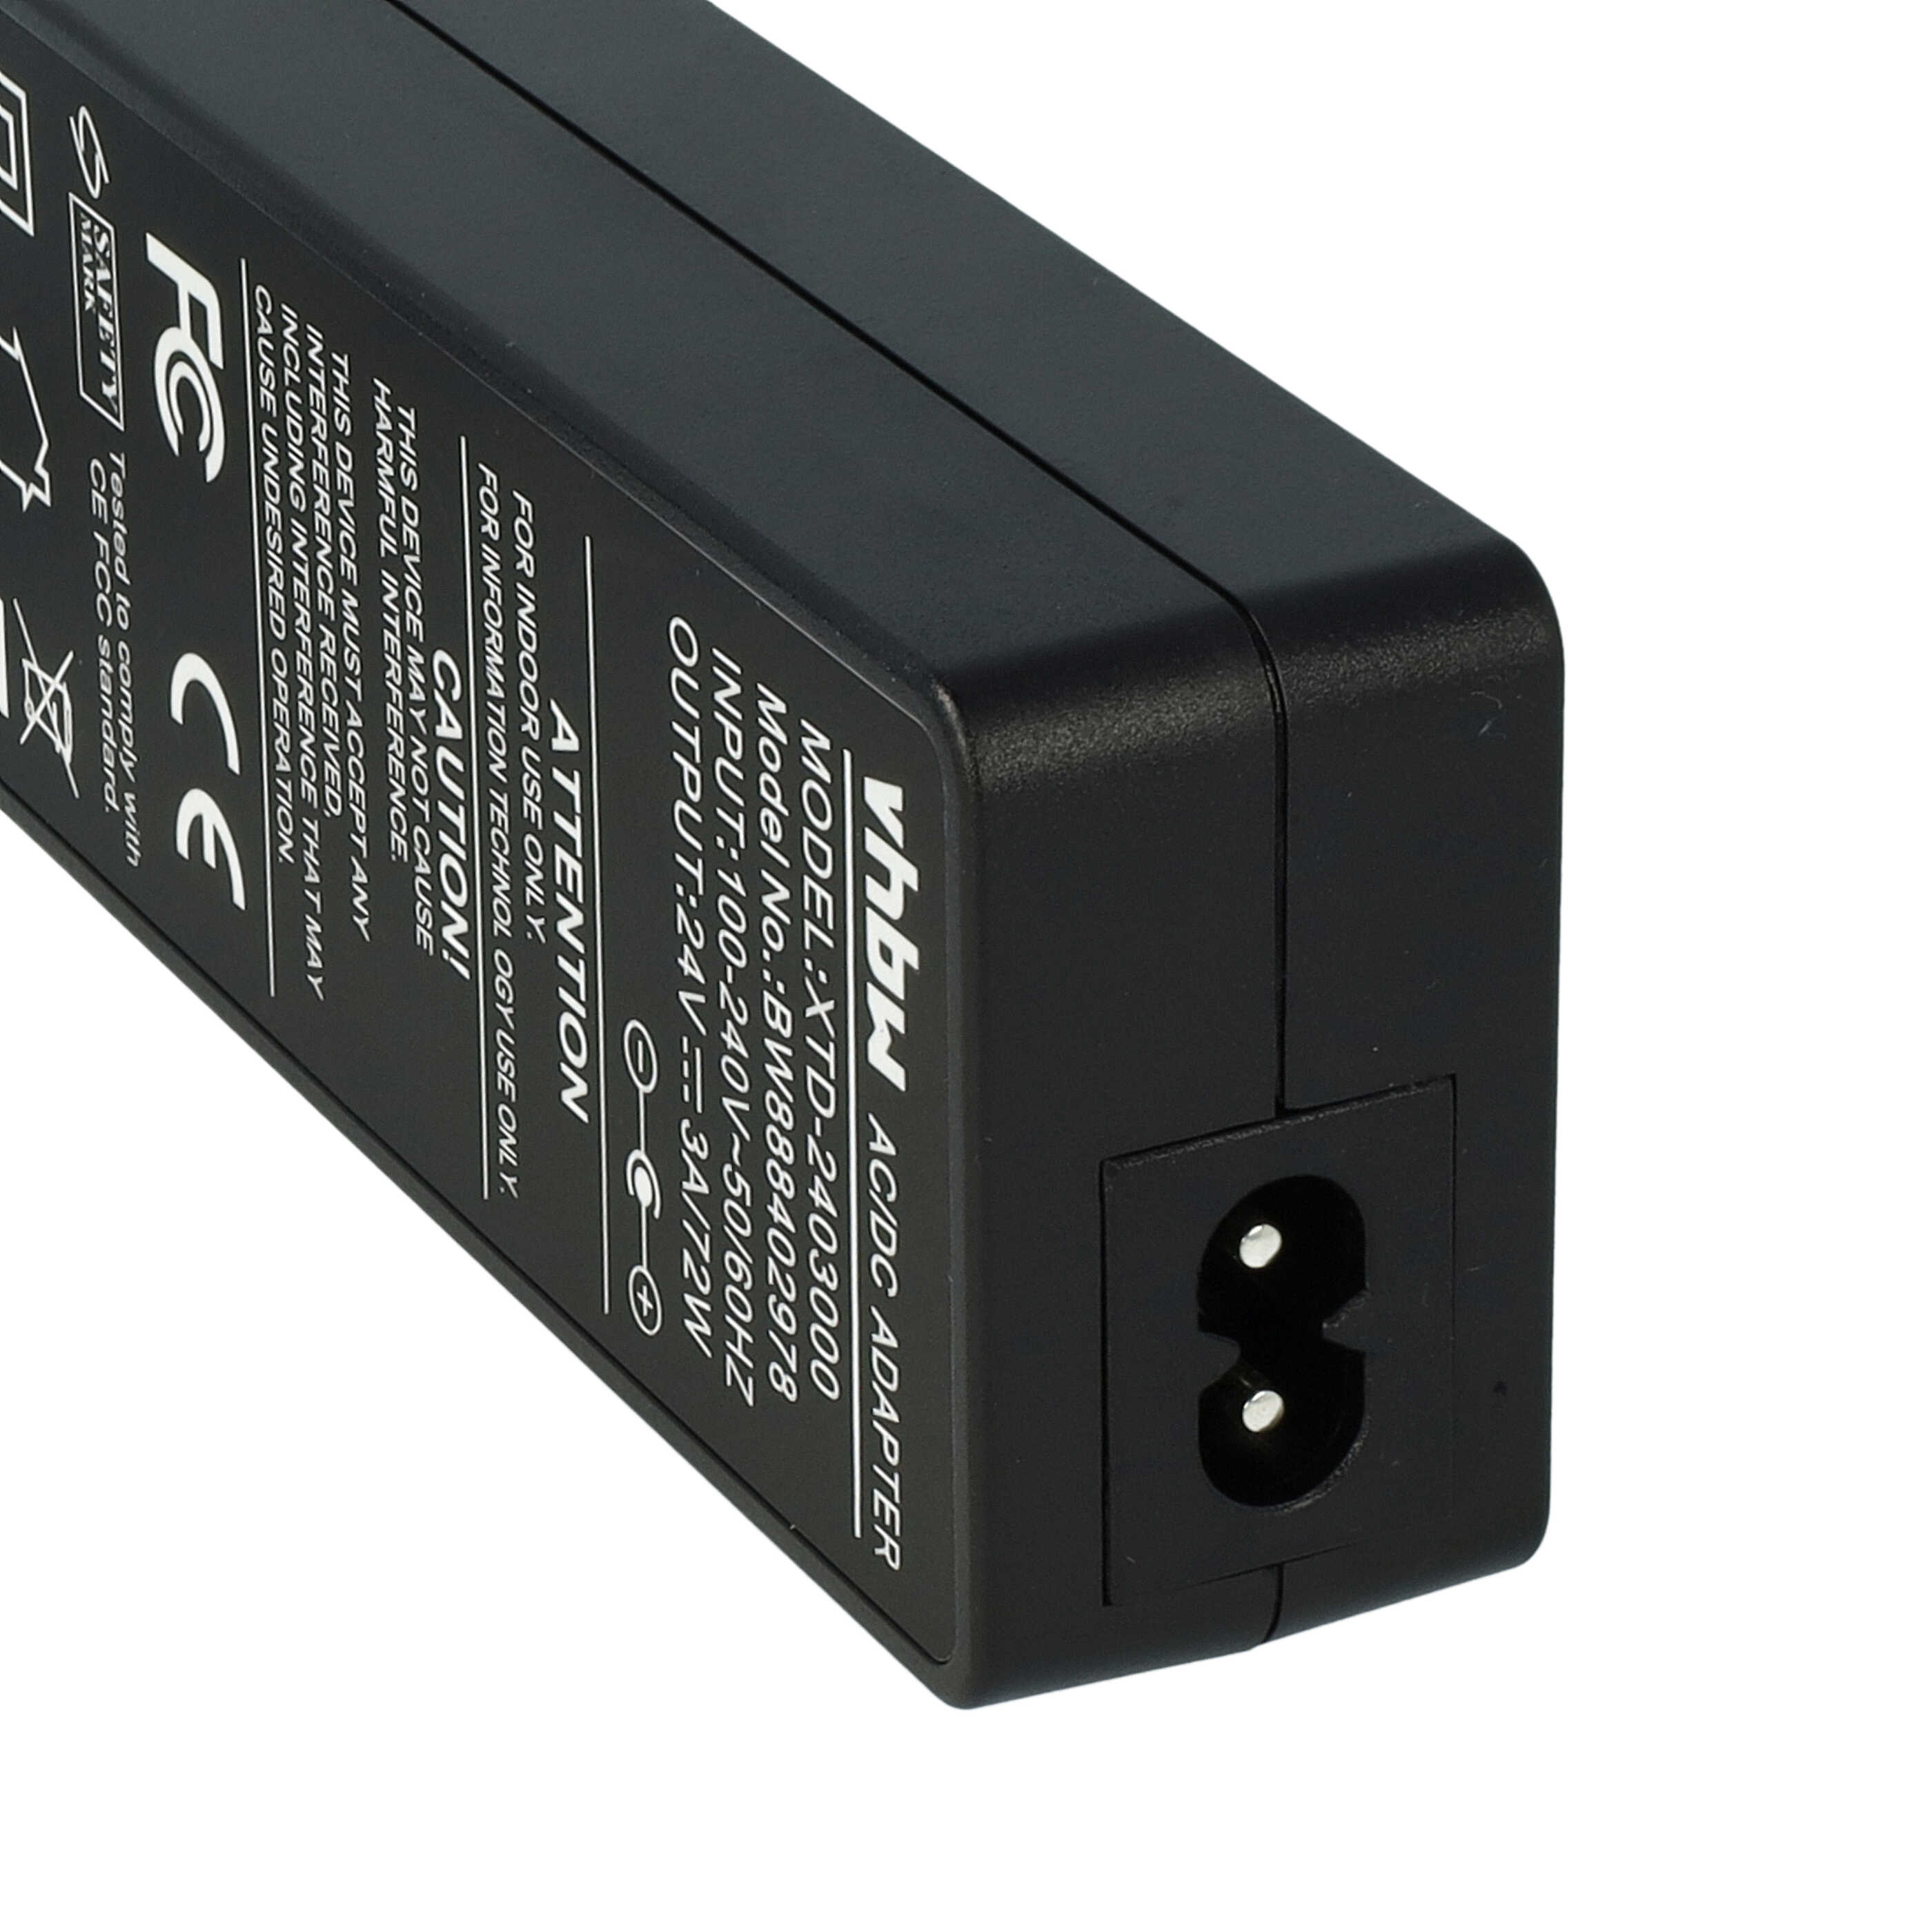 Mains Power Adapter replaces Cincon TR70A20 for Printer, Label Printer - 230 cm